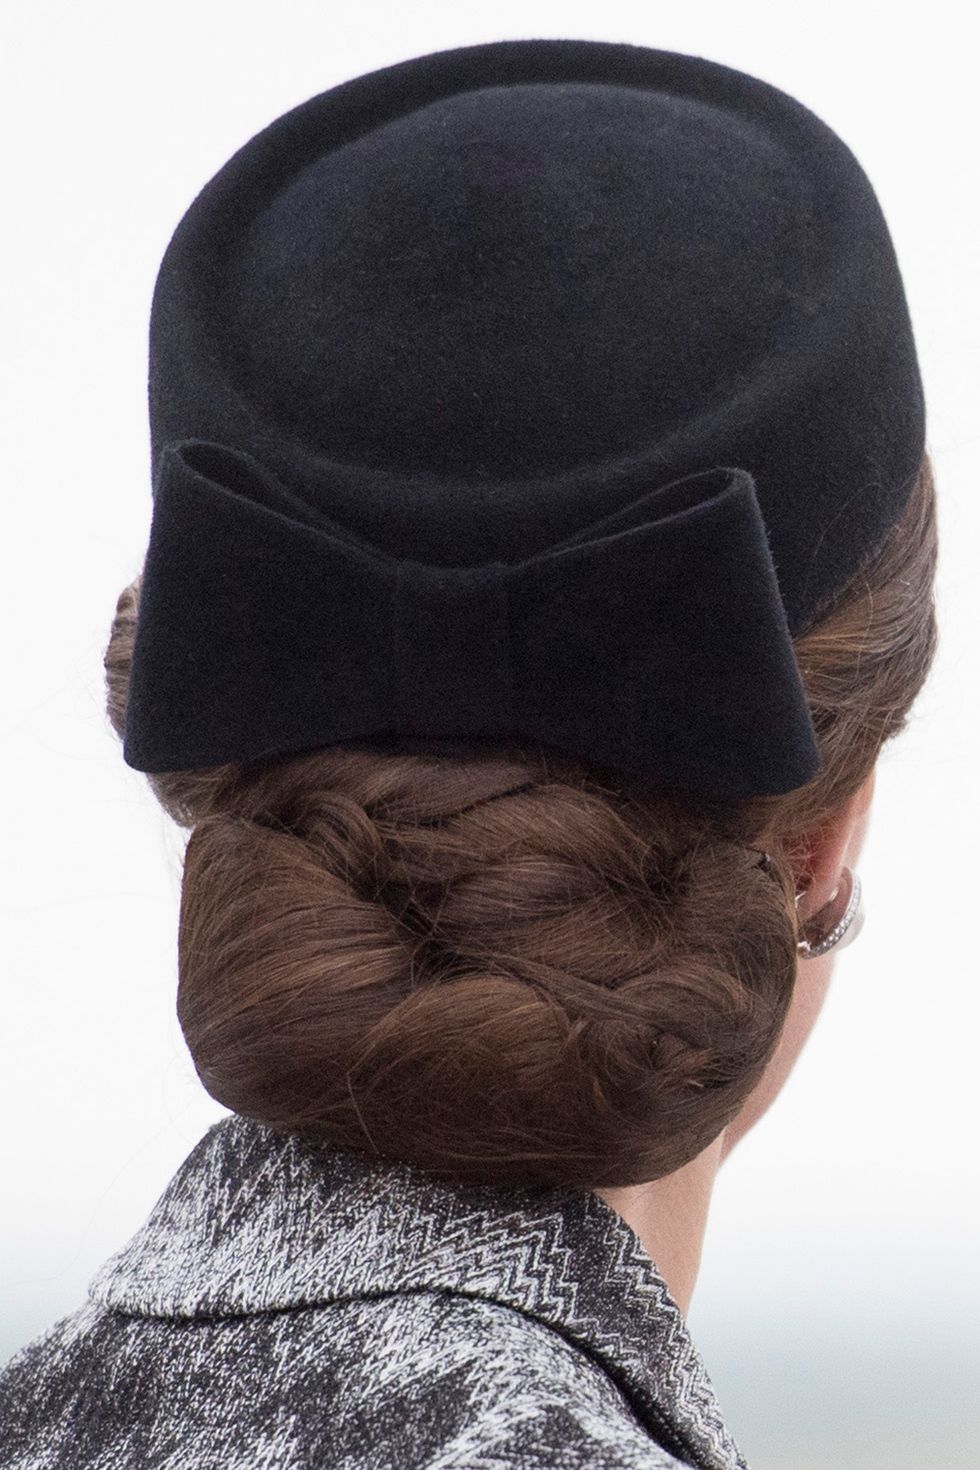 Duchess of Cambridge's hairnet